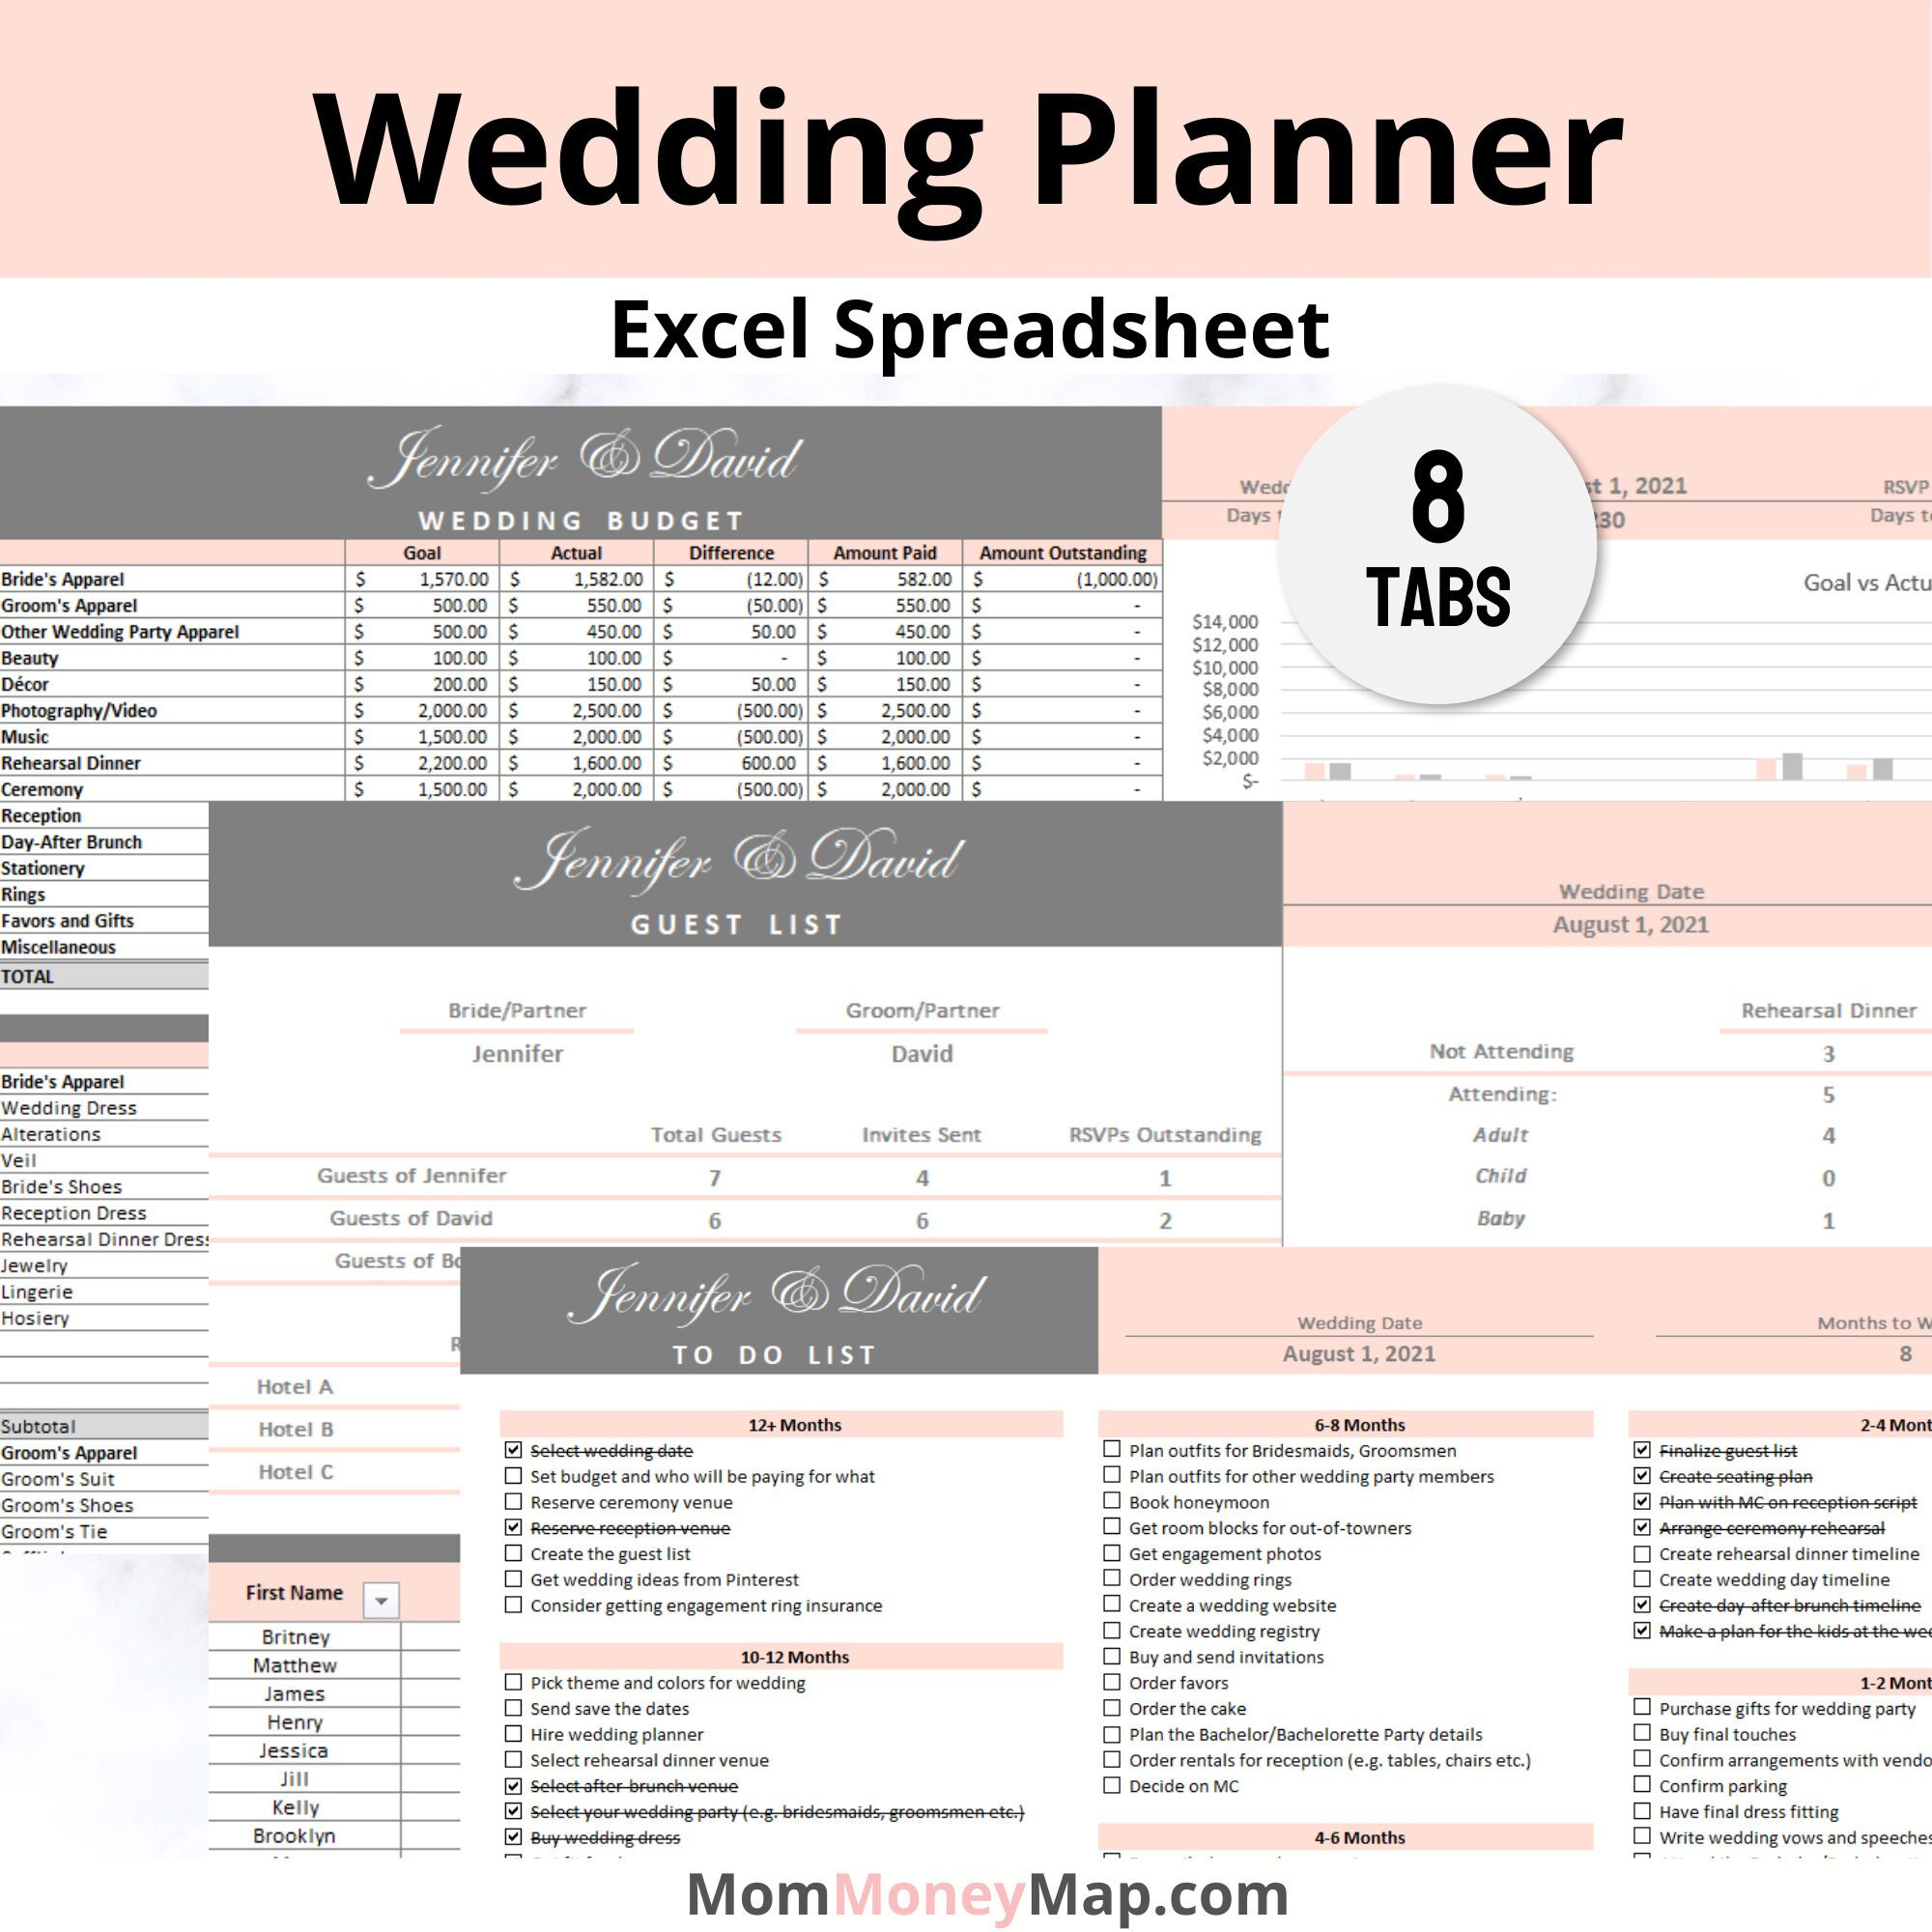 Wedding Planning Excel Spreadsheet Bundle Wedding Planner for Your